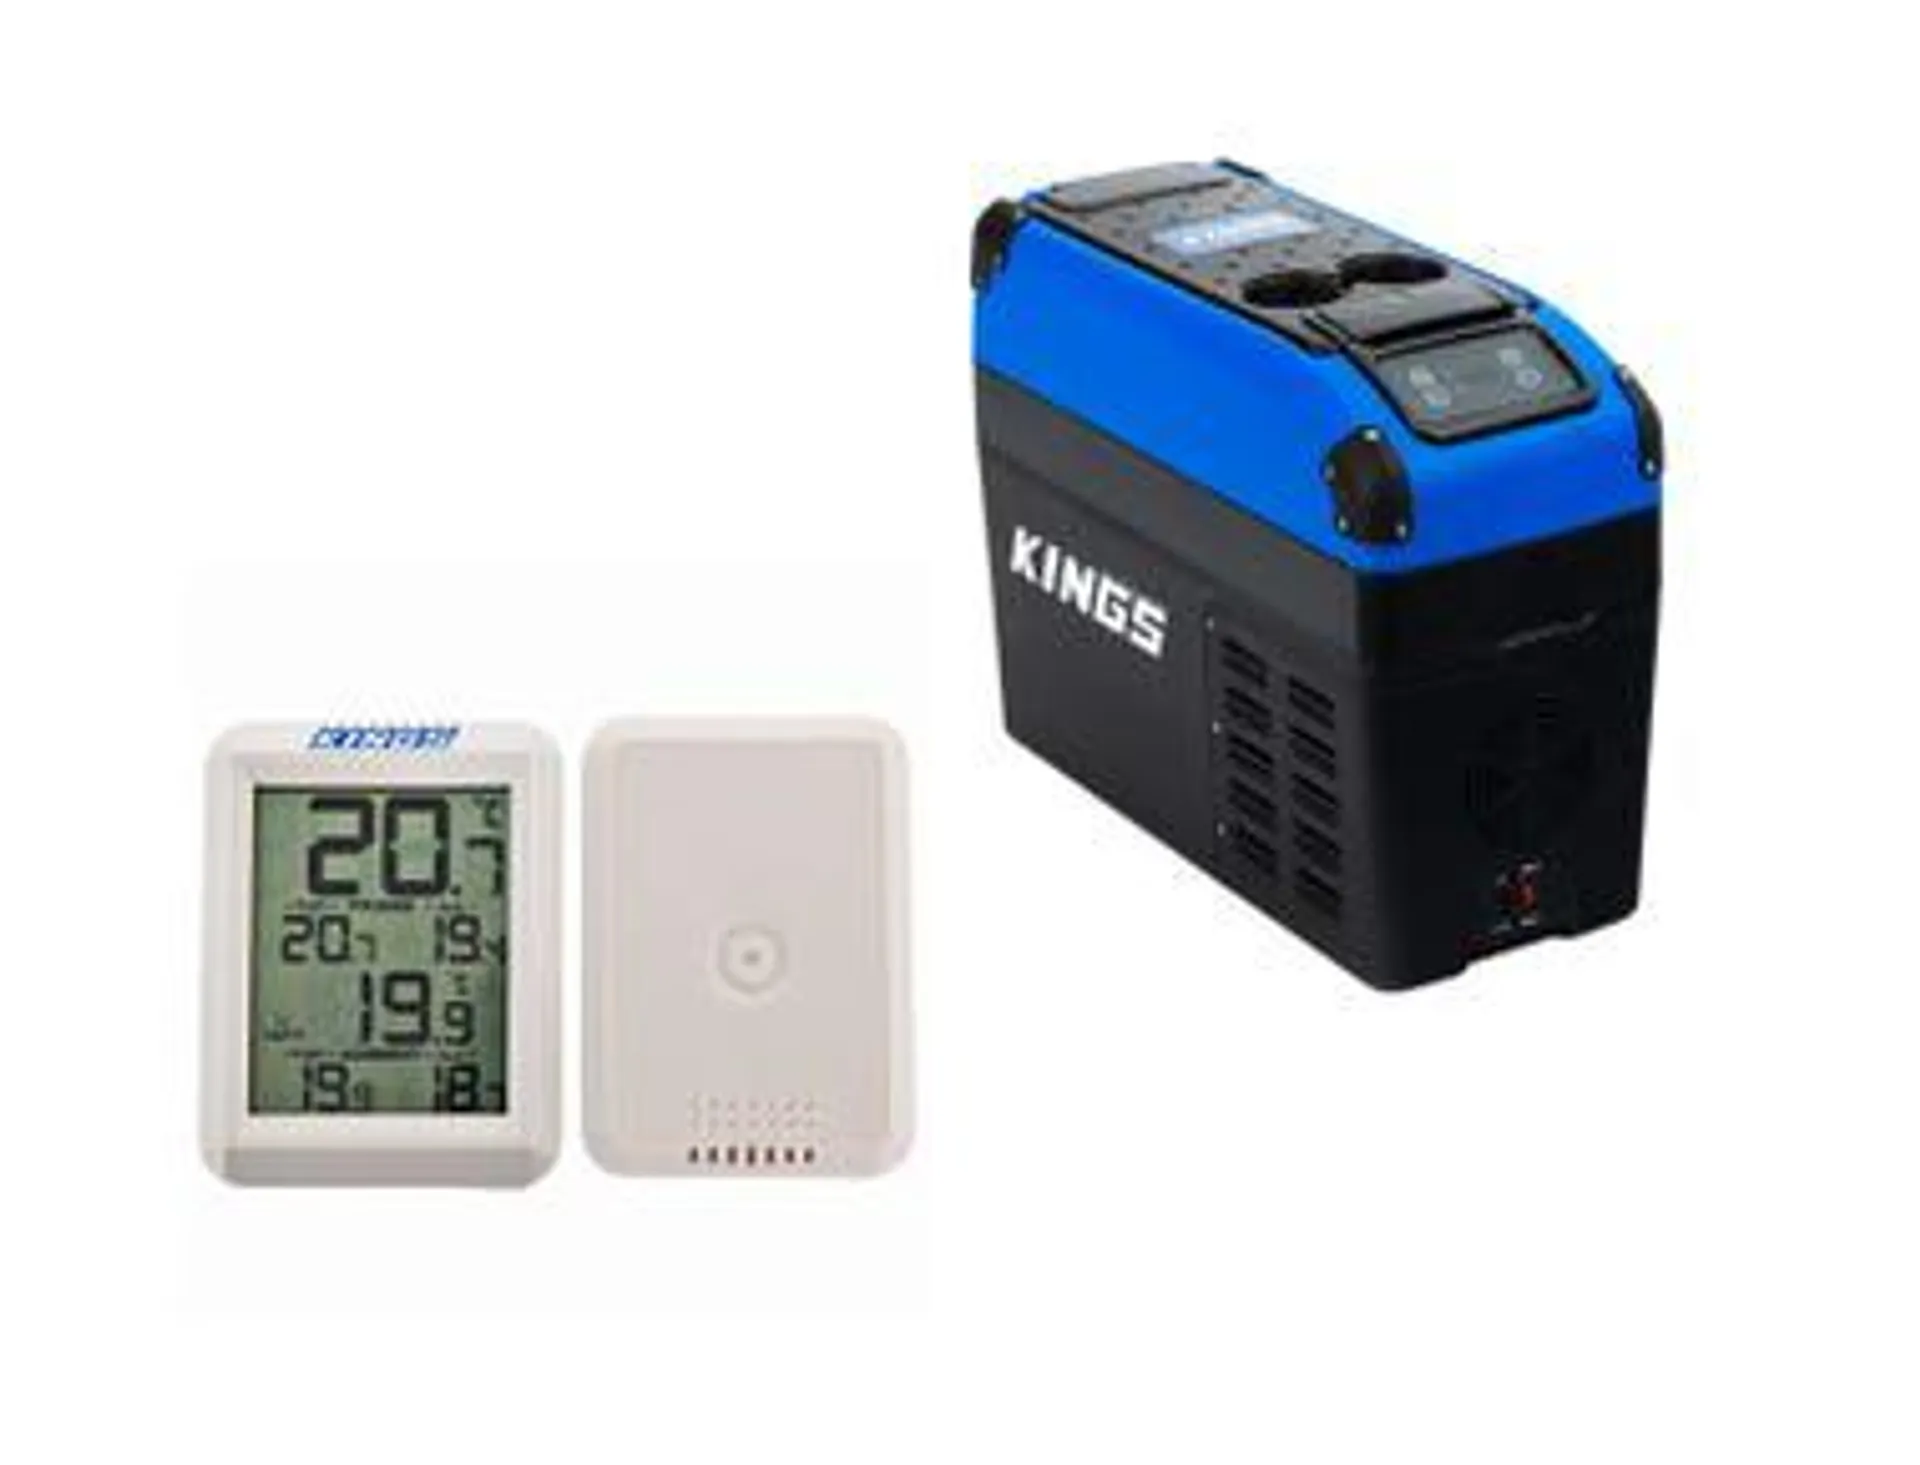 Kings Portable Console Fridge + Wireless Fridge Thermometer